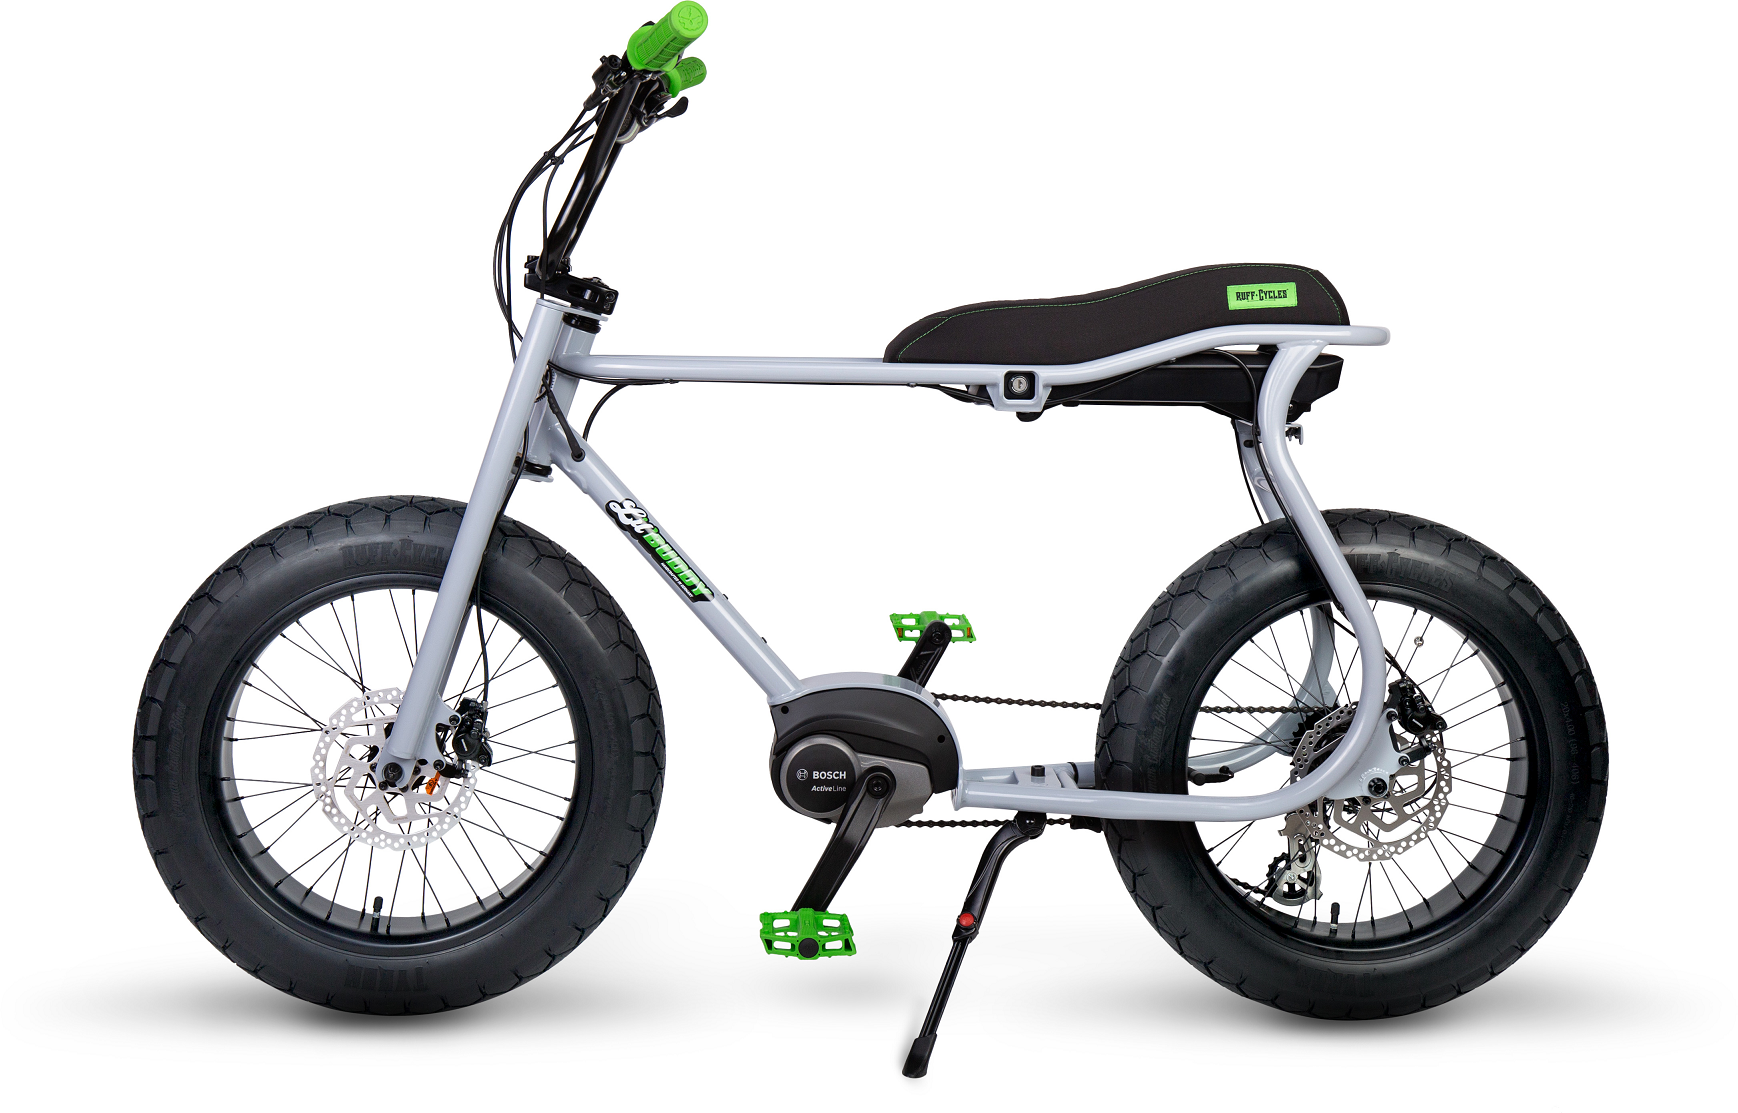 RUFF-CYCLES-Lil-Buddy-2022-elektrische-fatbike-zilver-grijs